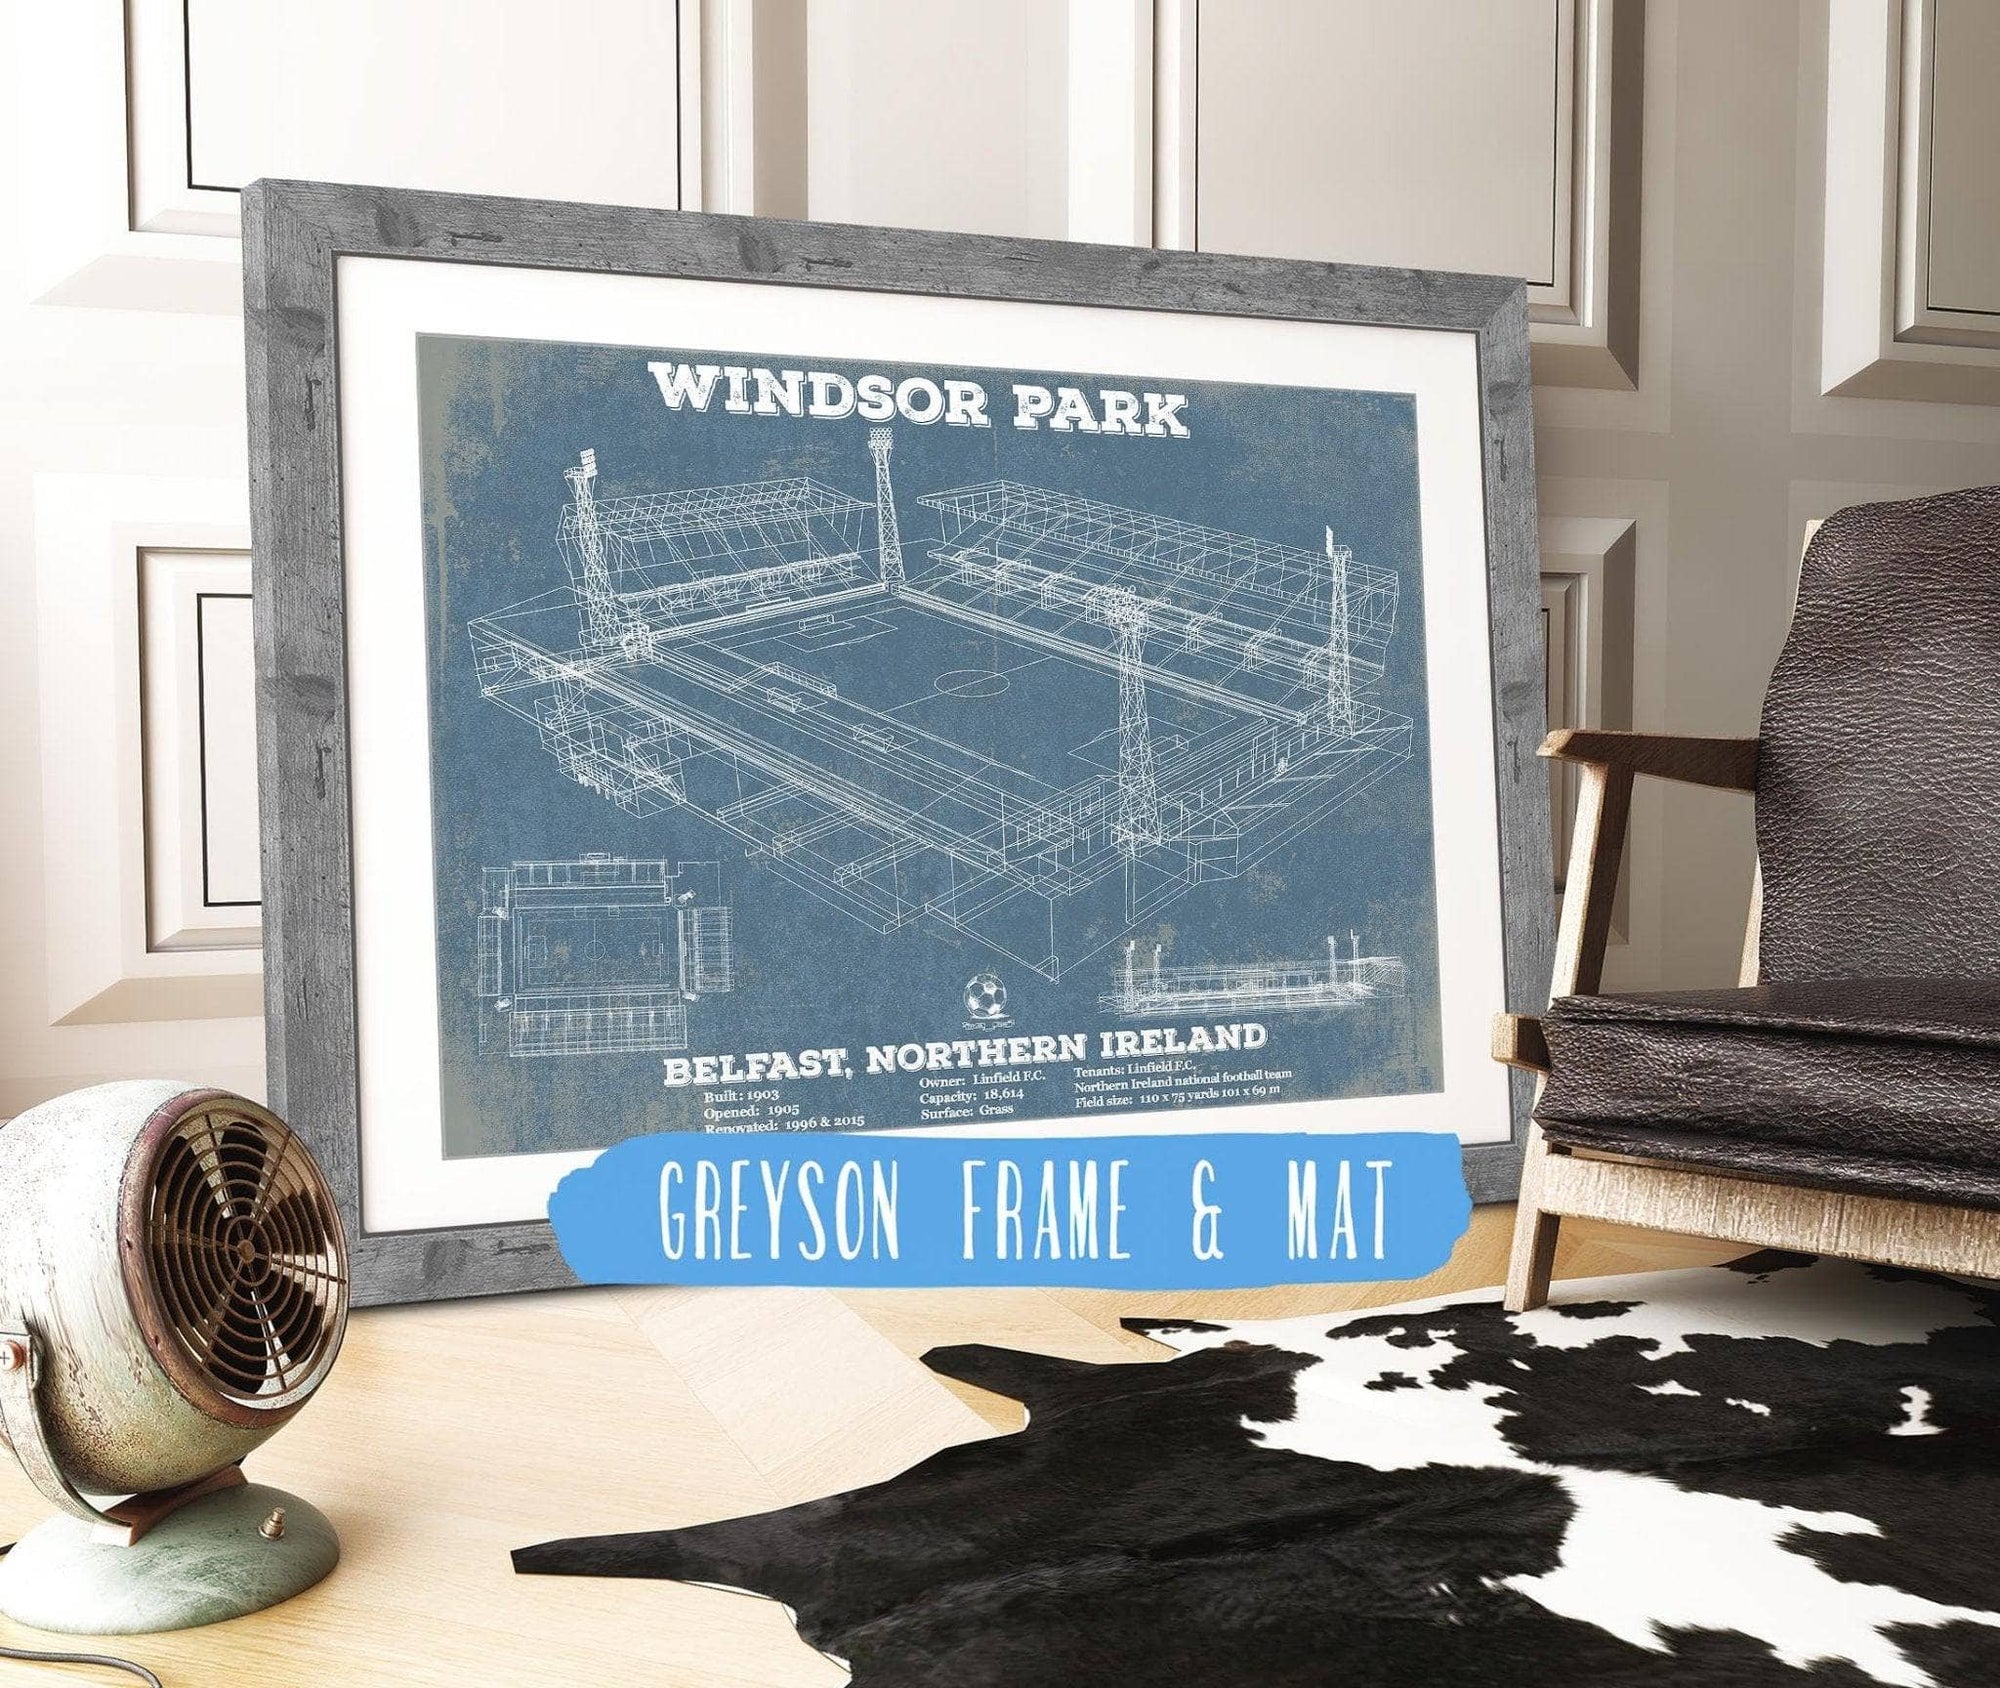 Cutler West Soccer Collection 14" x 11" / Greyson Frame & Mat Linfield F.C. - Vintage Windsor Park North Ireland Soccer Print 813503375_7923